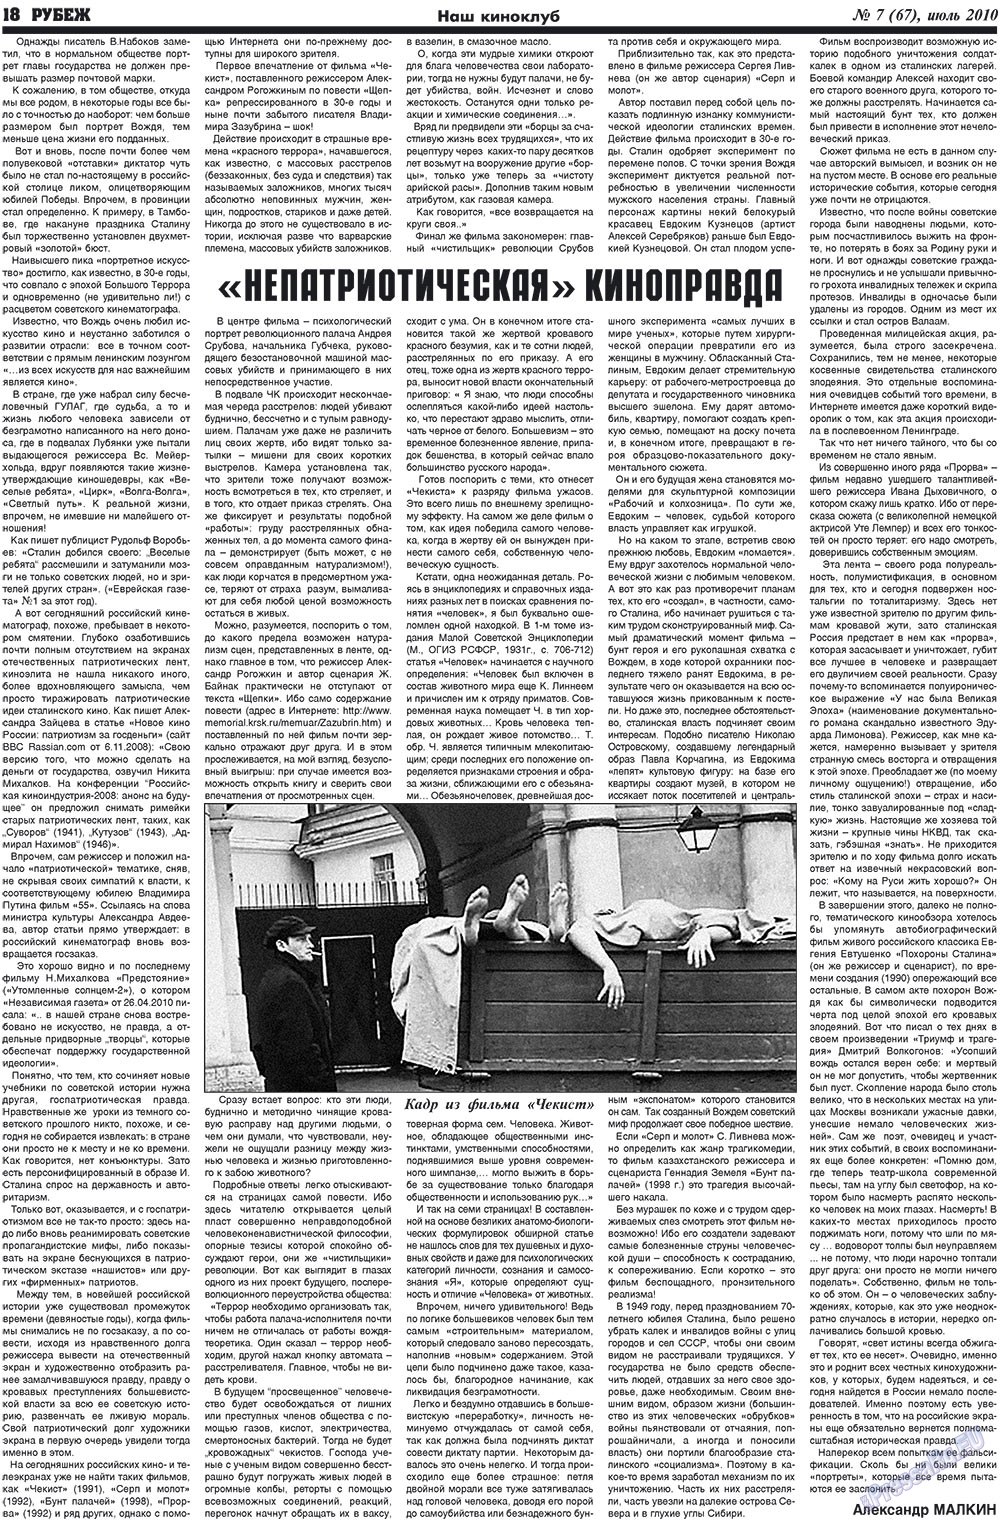 Рубеж, газета. 2010 №7 стр.18